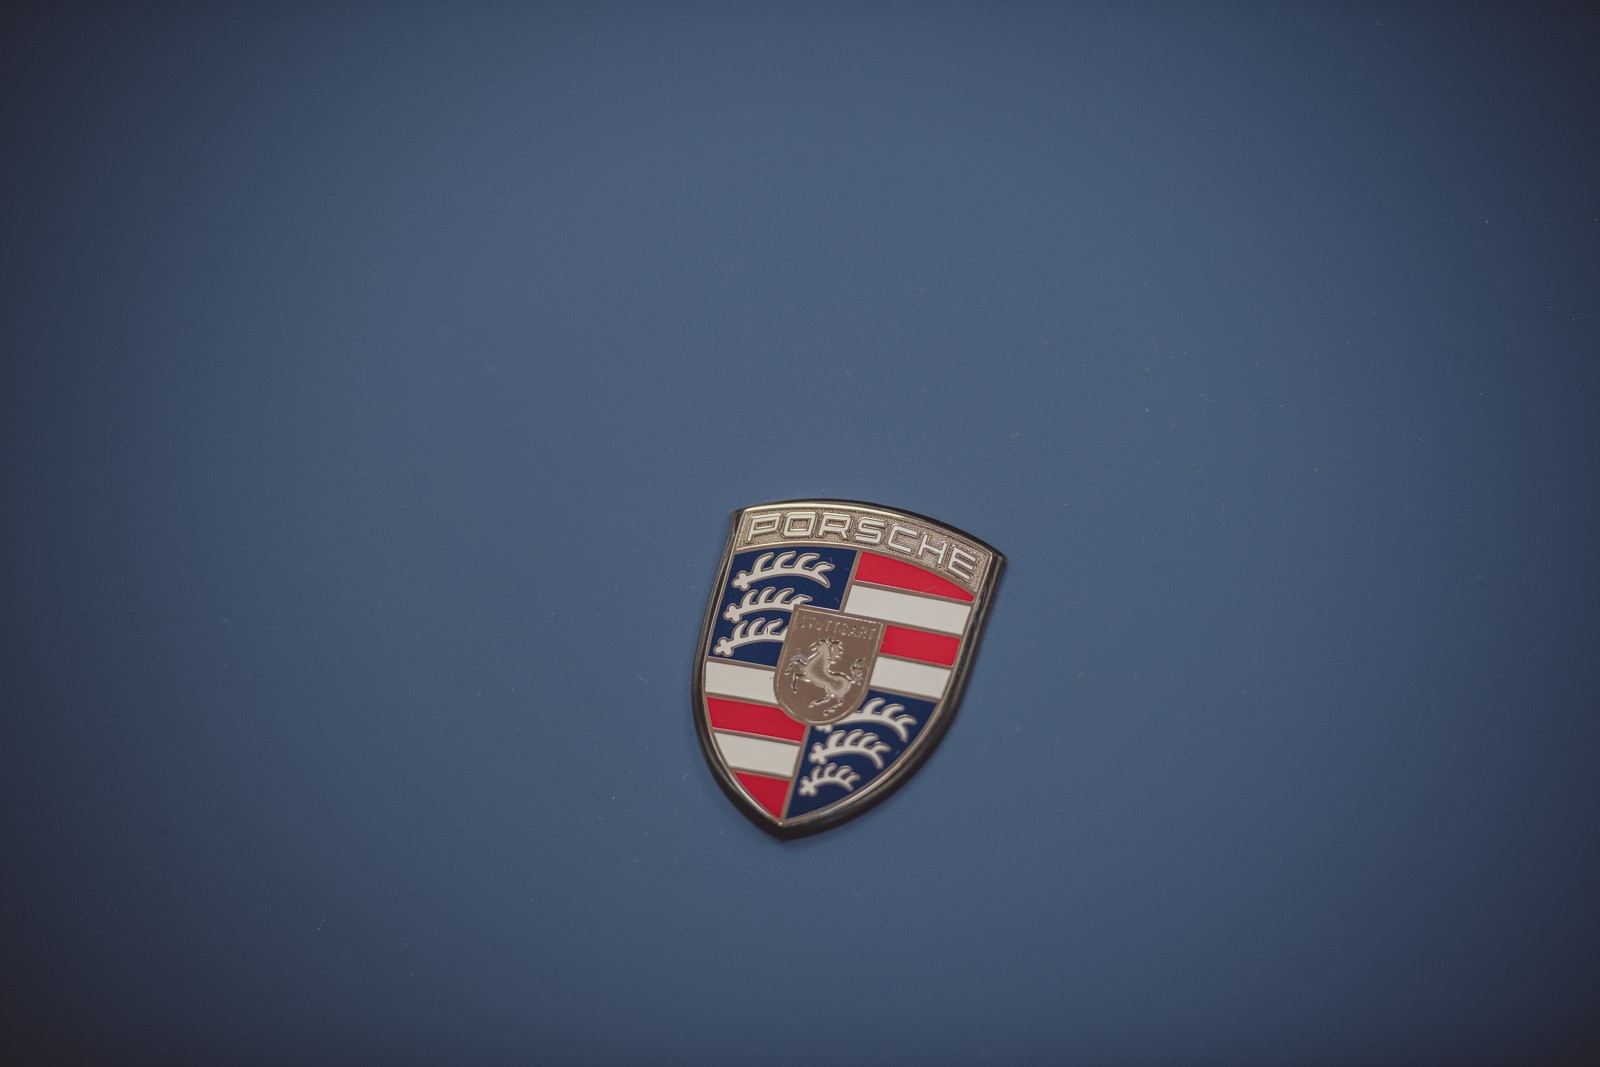 Special edition Porsche hood crest badge